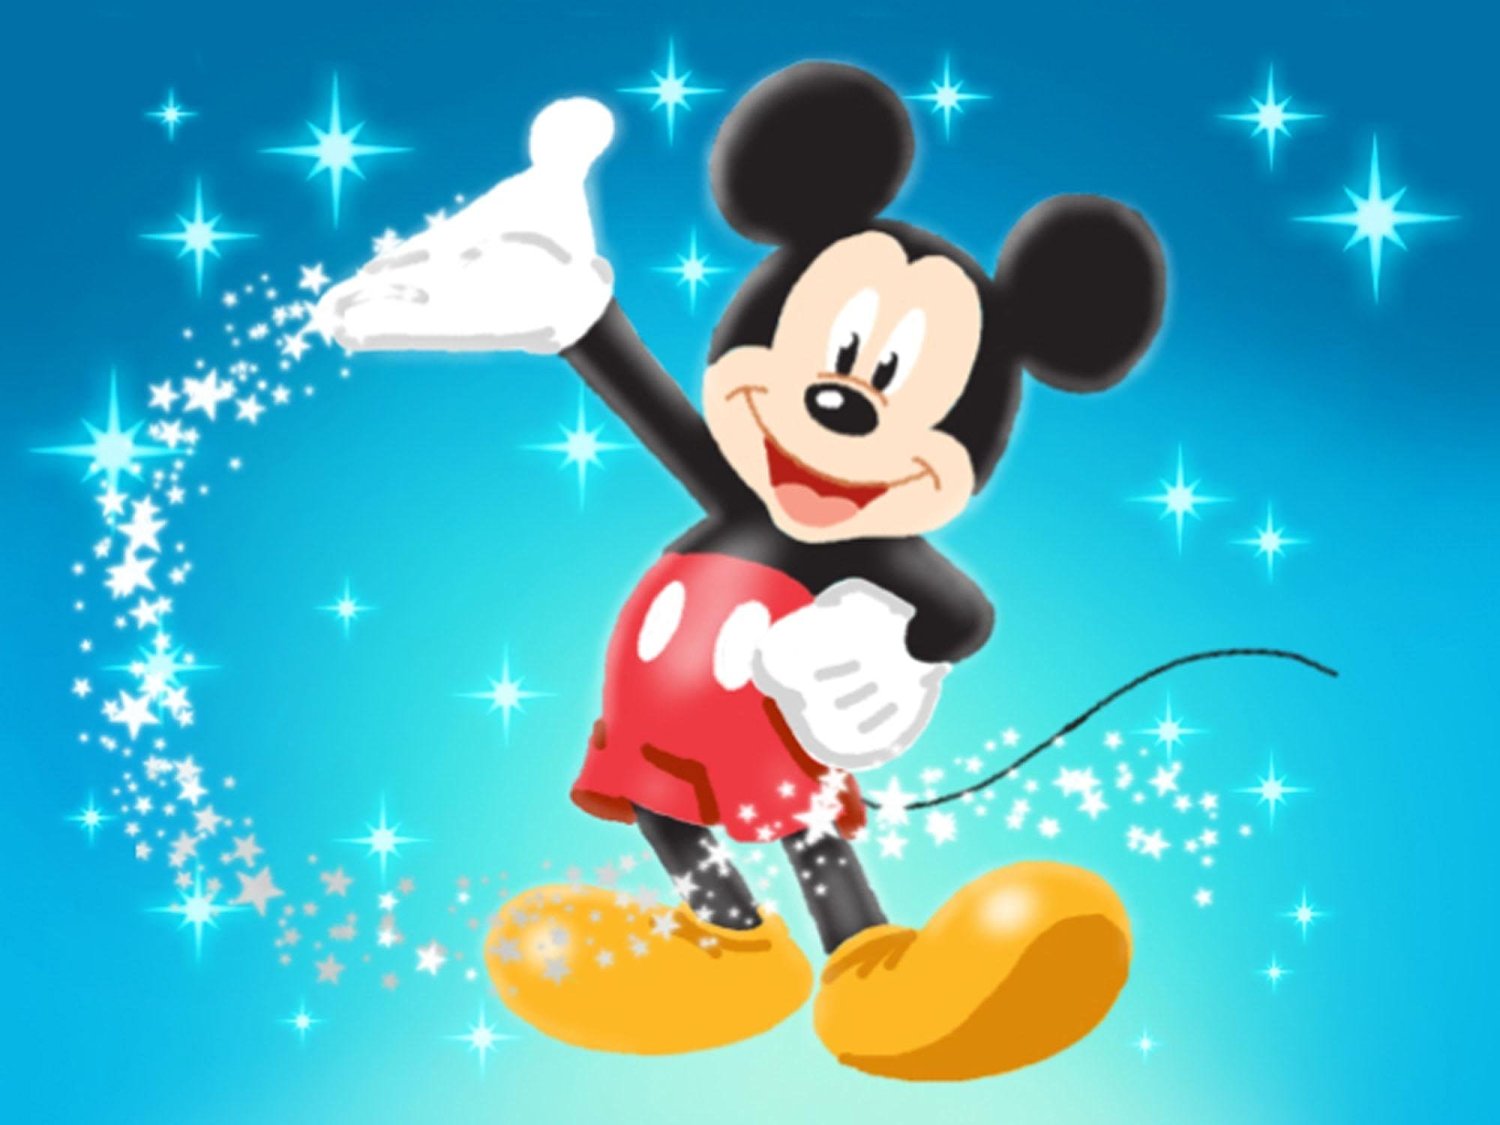 Official Disney Art Academy - NINTENDO eShop Code (3DS/EU/Digital Download Code)